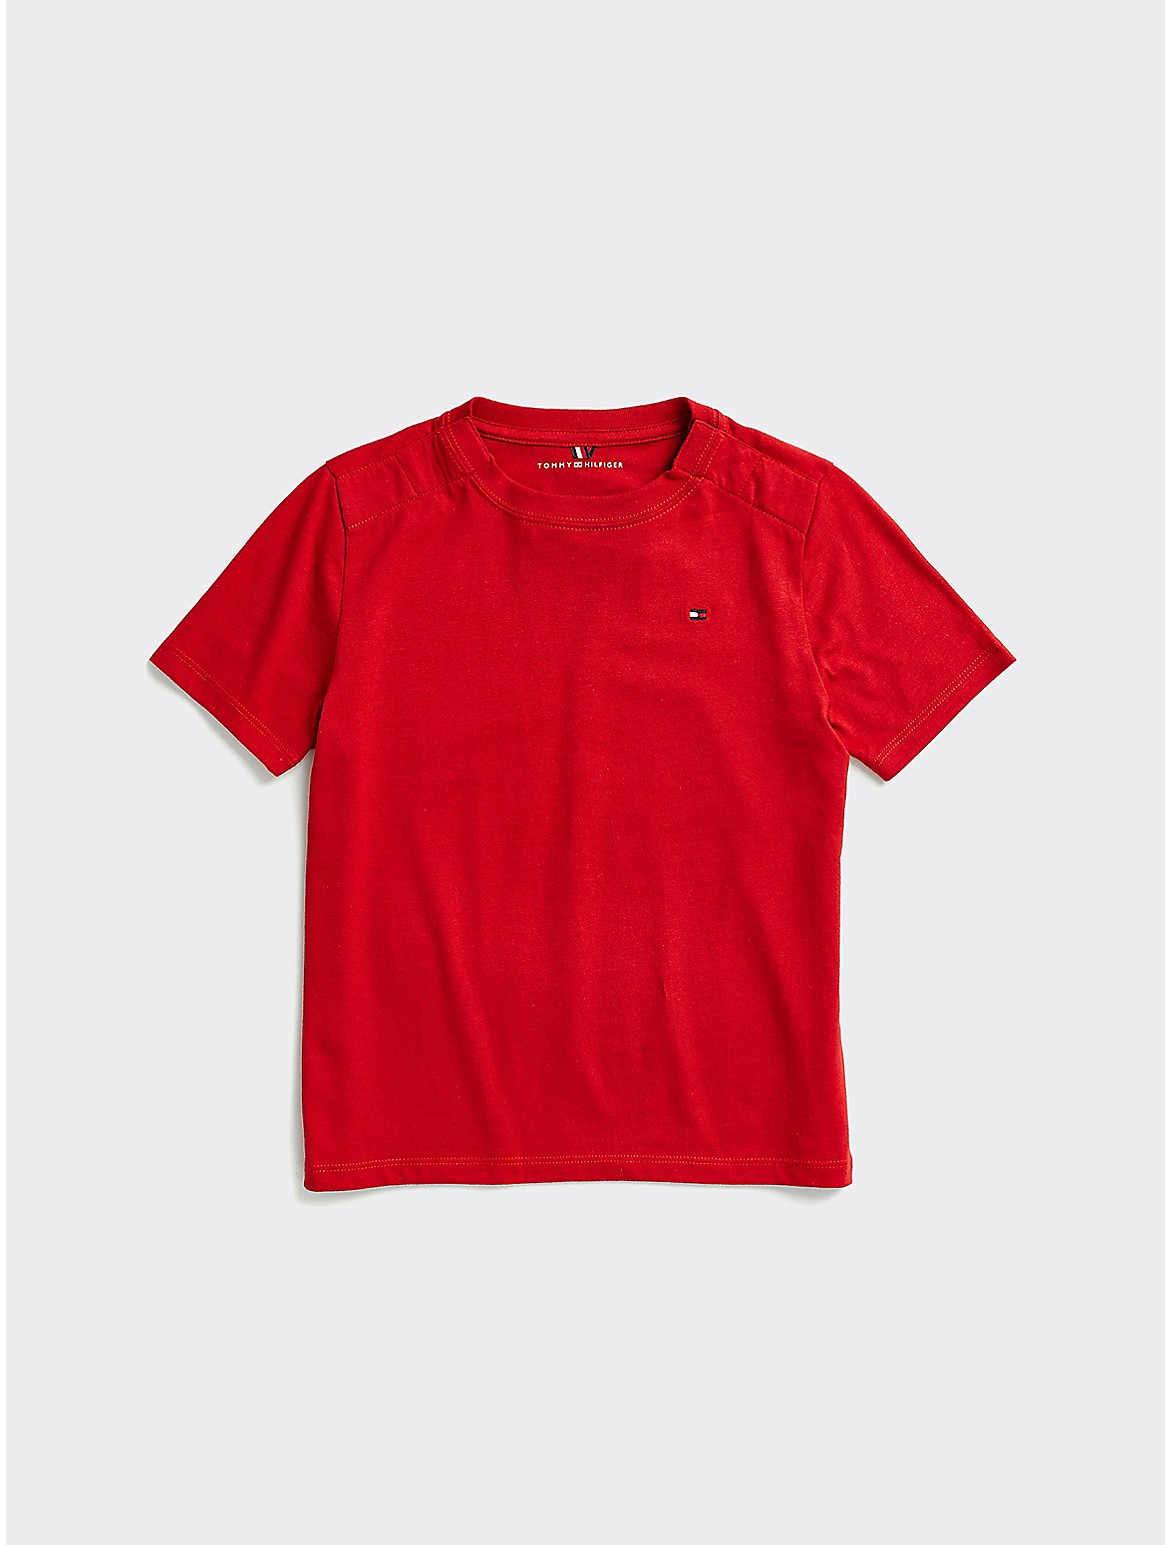 Tommy Hilfiger Boys' Classic T-Shirt - Red - L